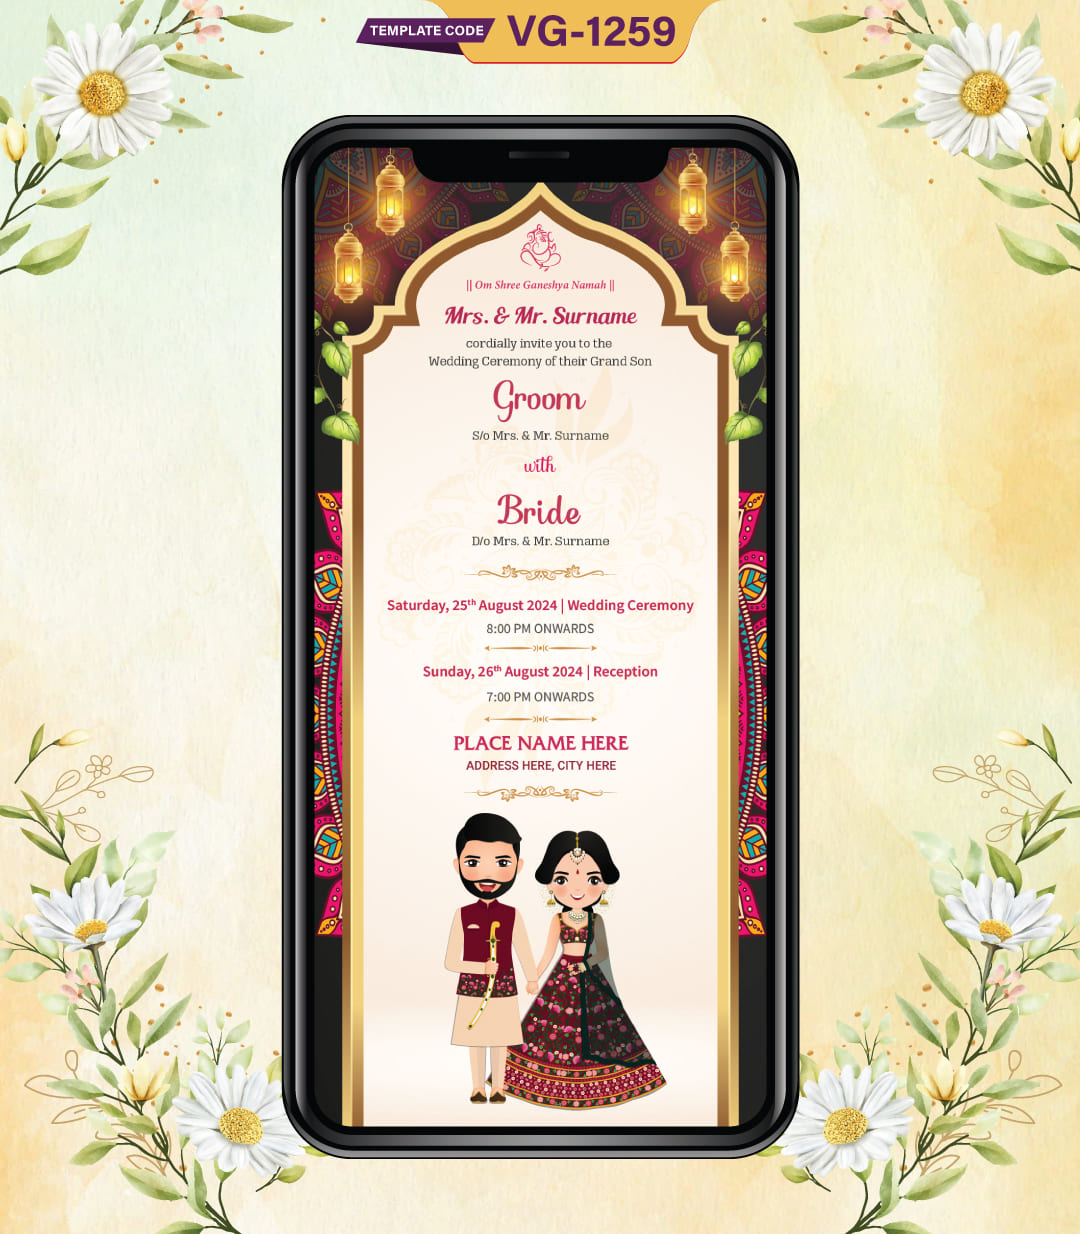 Royal Wedding Invitation Card